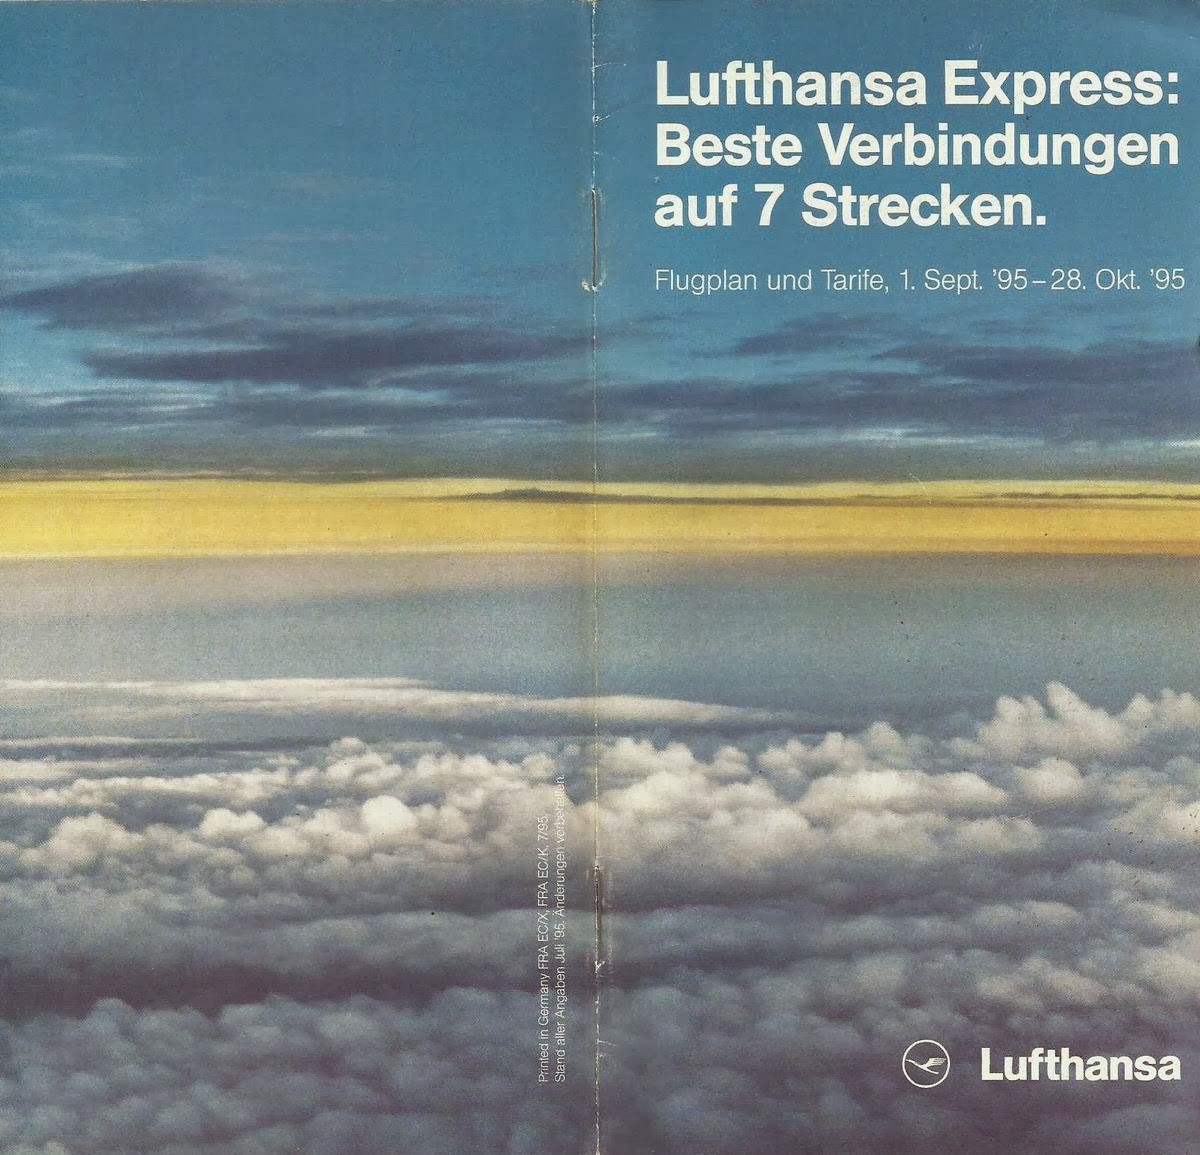 LH+lufthansa+express+1995+1.jpg